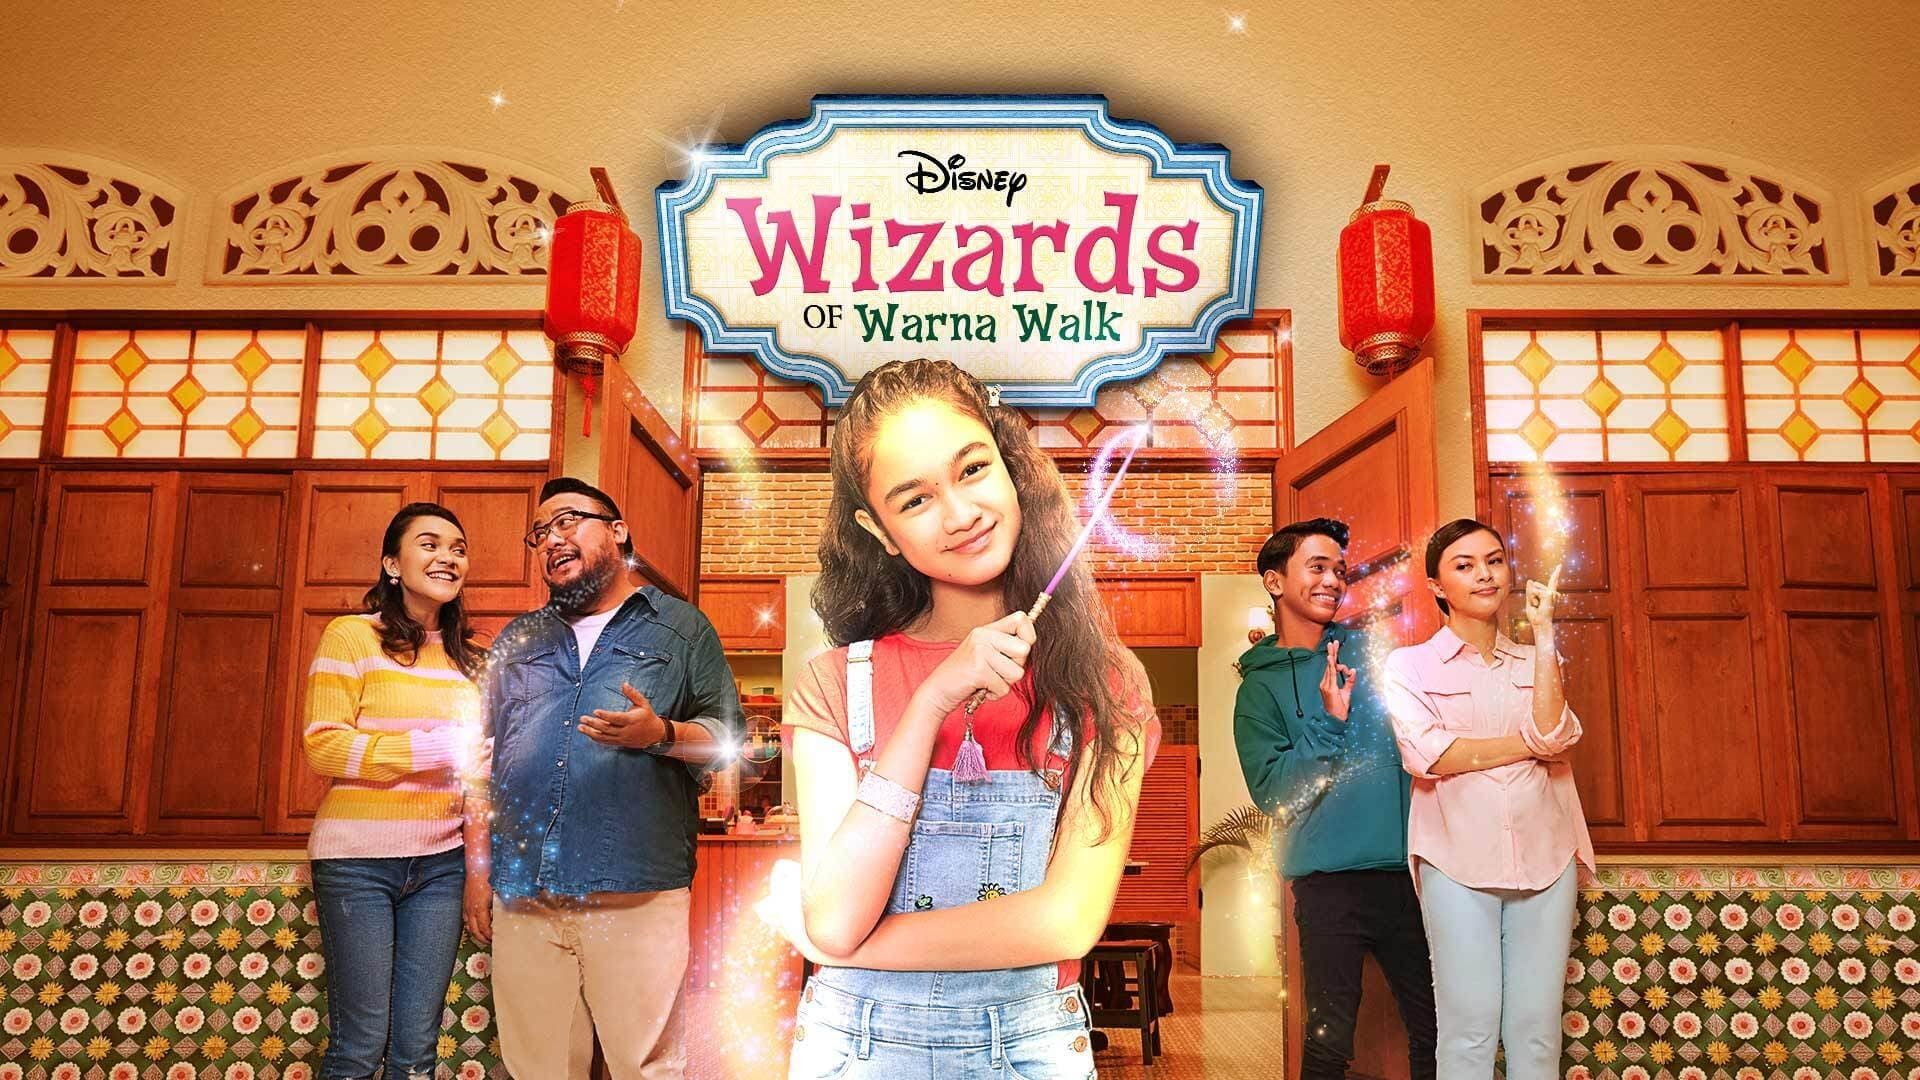 Wizards of Warna Walk background